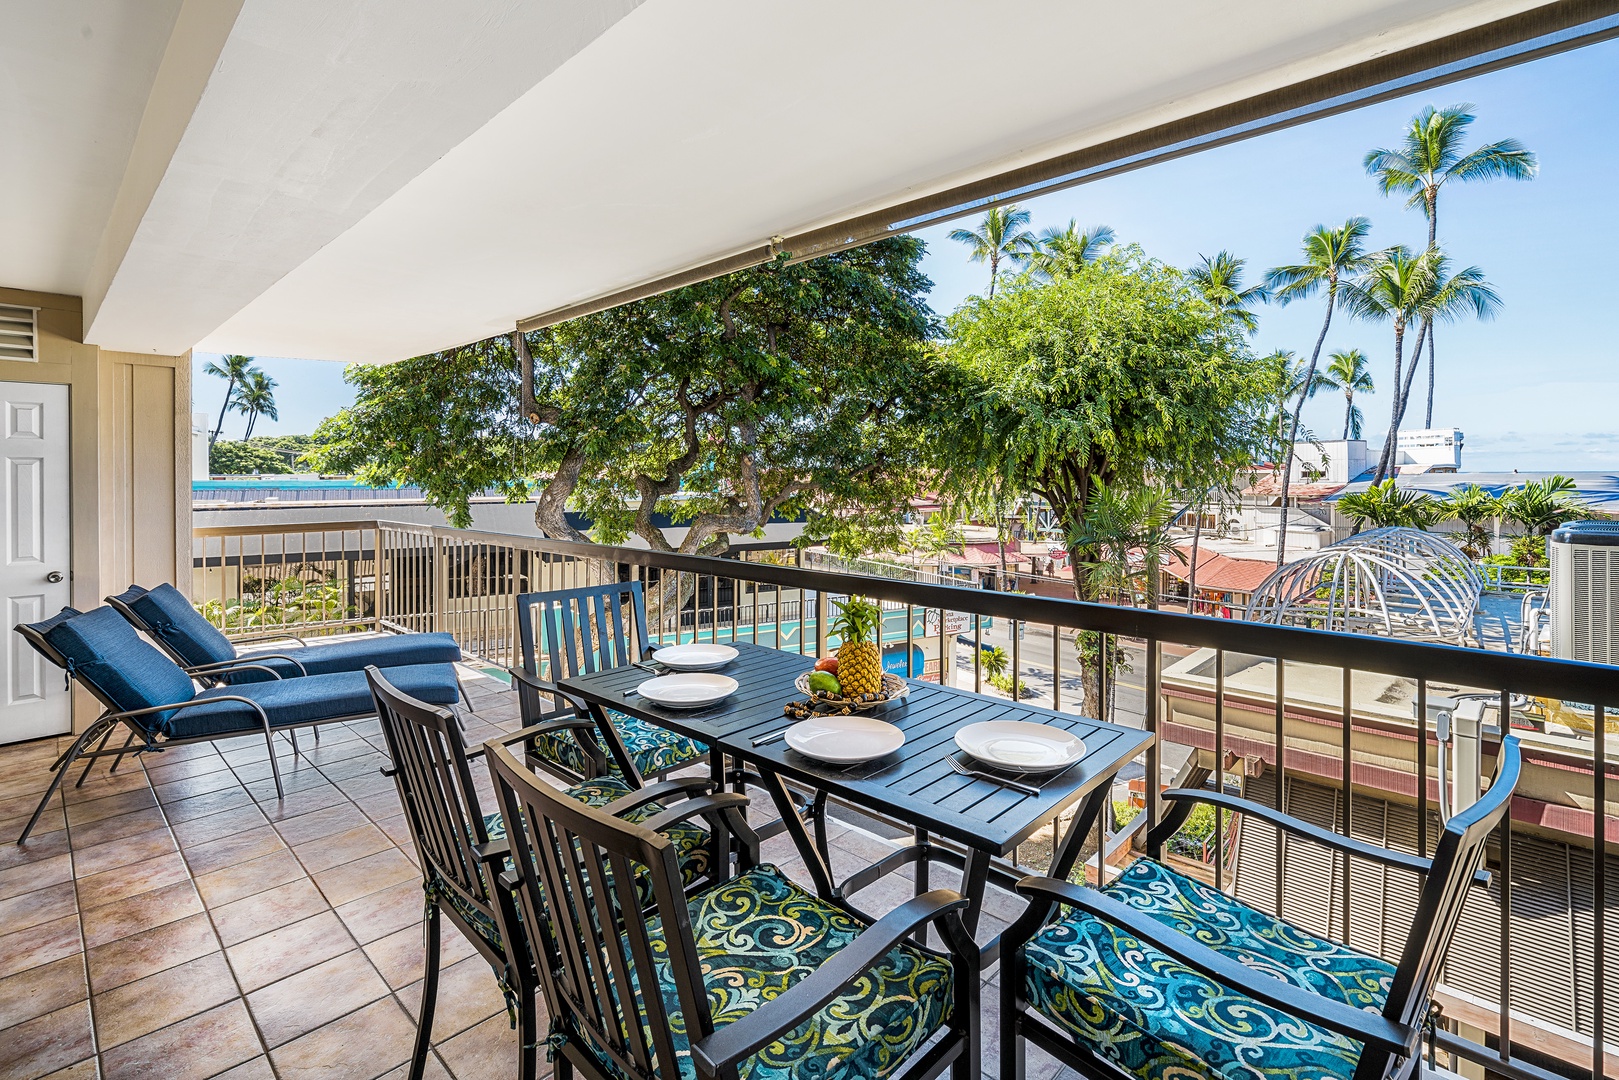 Kailua Kona Vacation Rentals, Kona Plaza 201 - Spacious wrap-a-round Lanai with room for all!